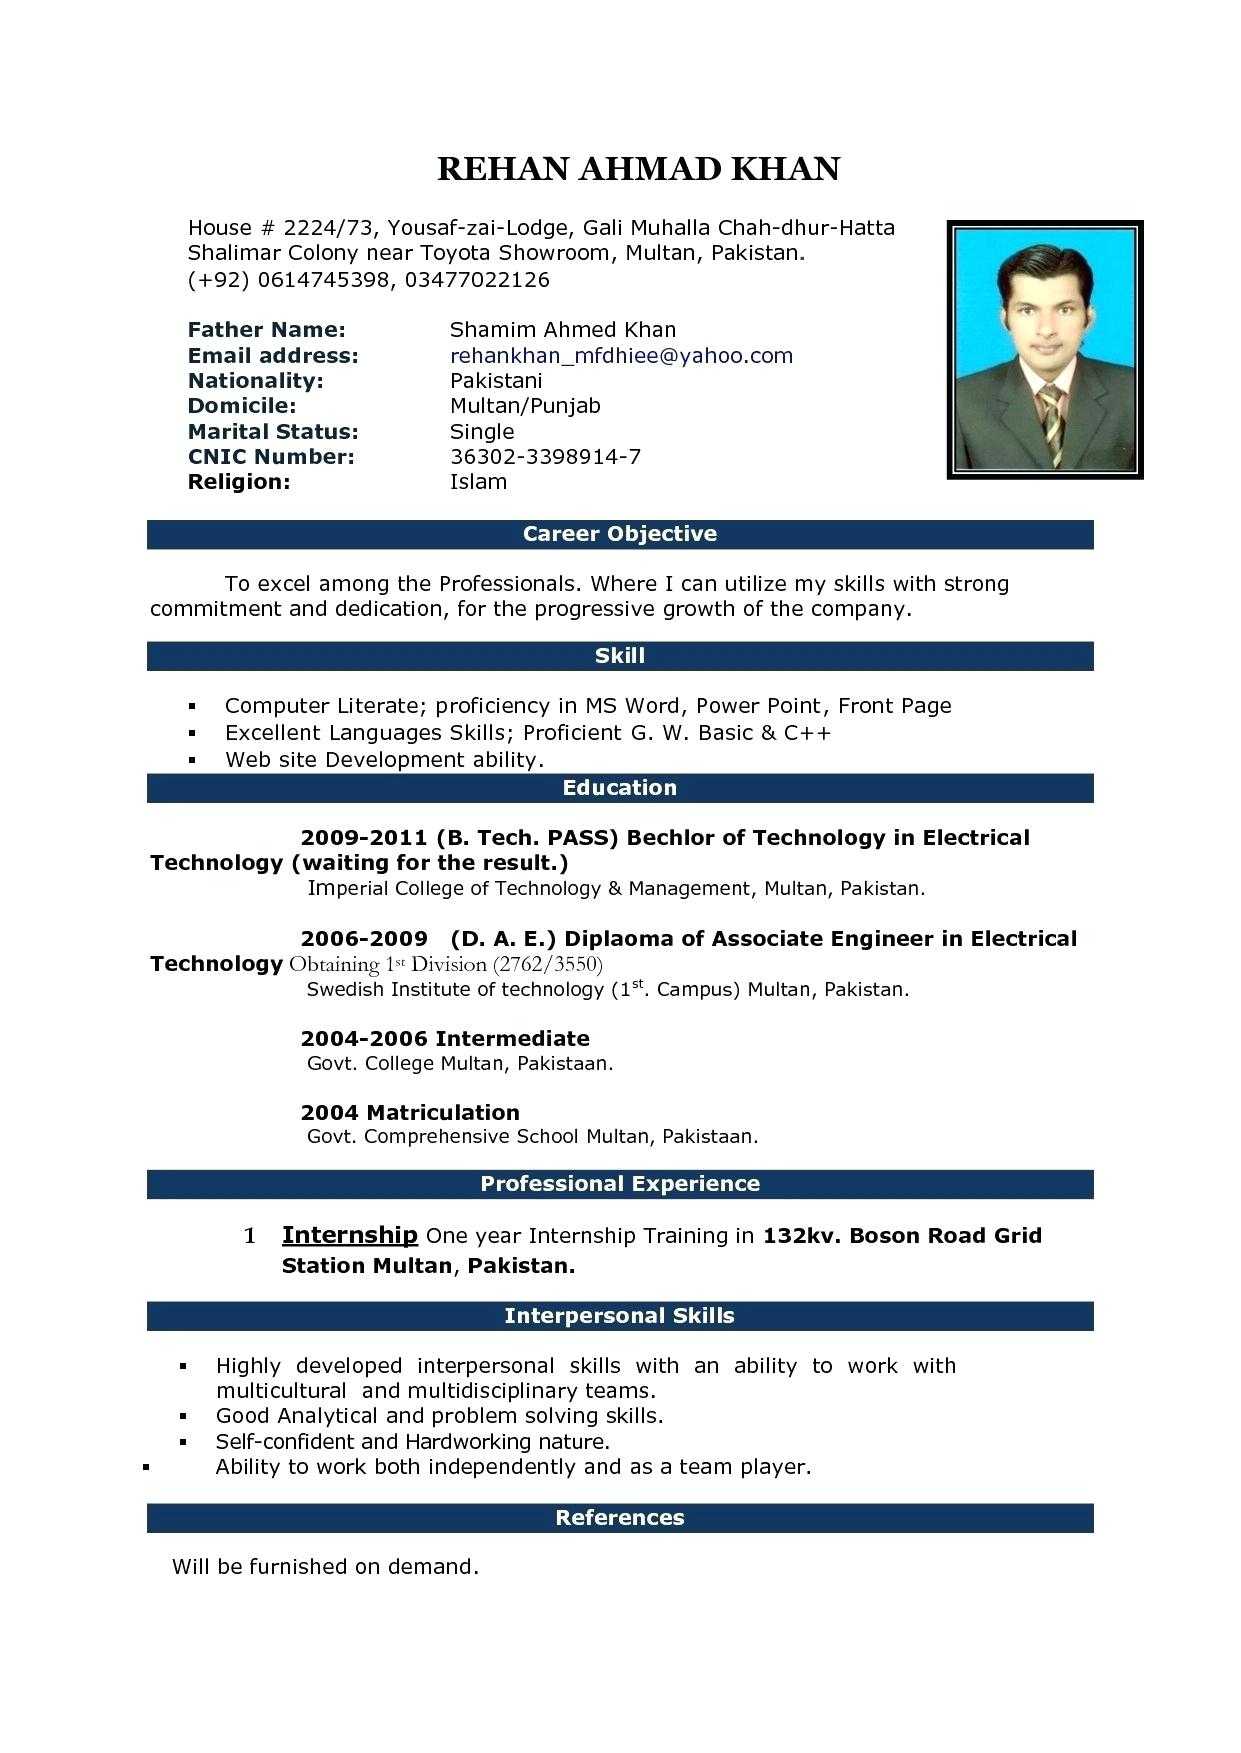 Resume: Resume Template On Microsoft Word 2010 Inside Resume Templates Word 2010